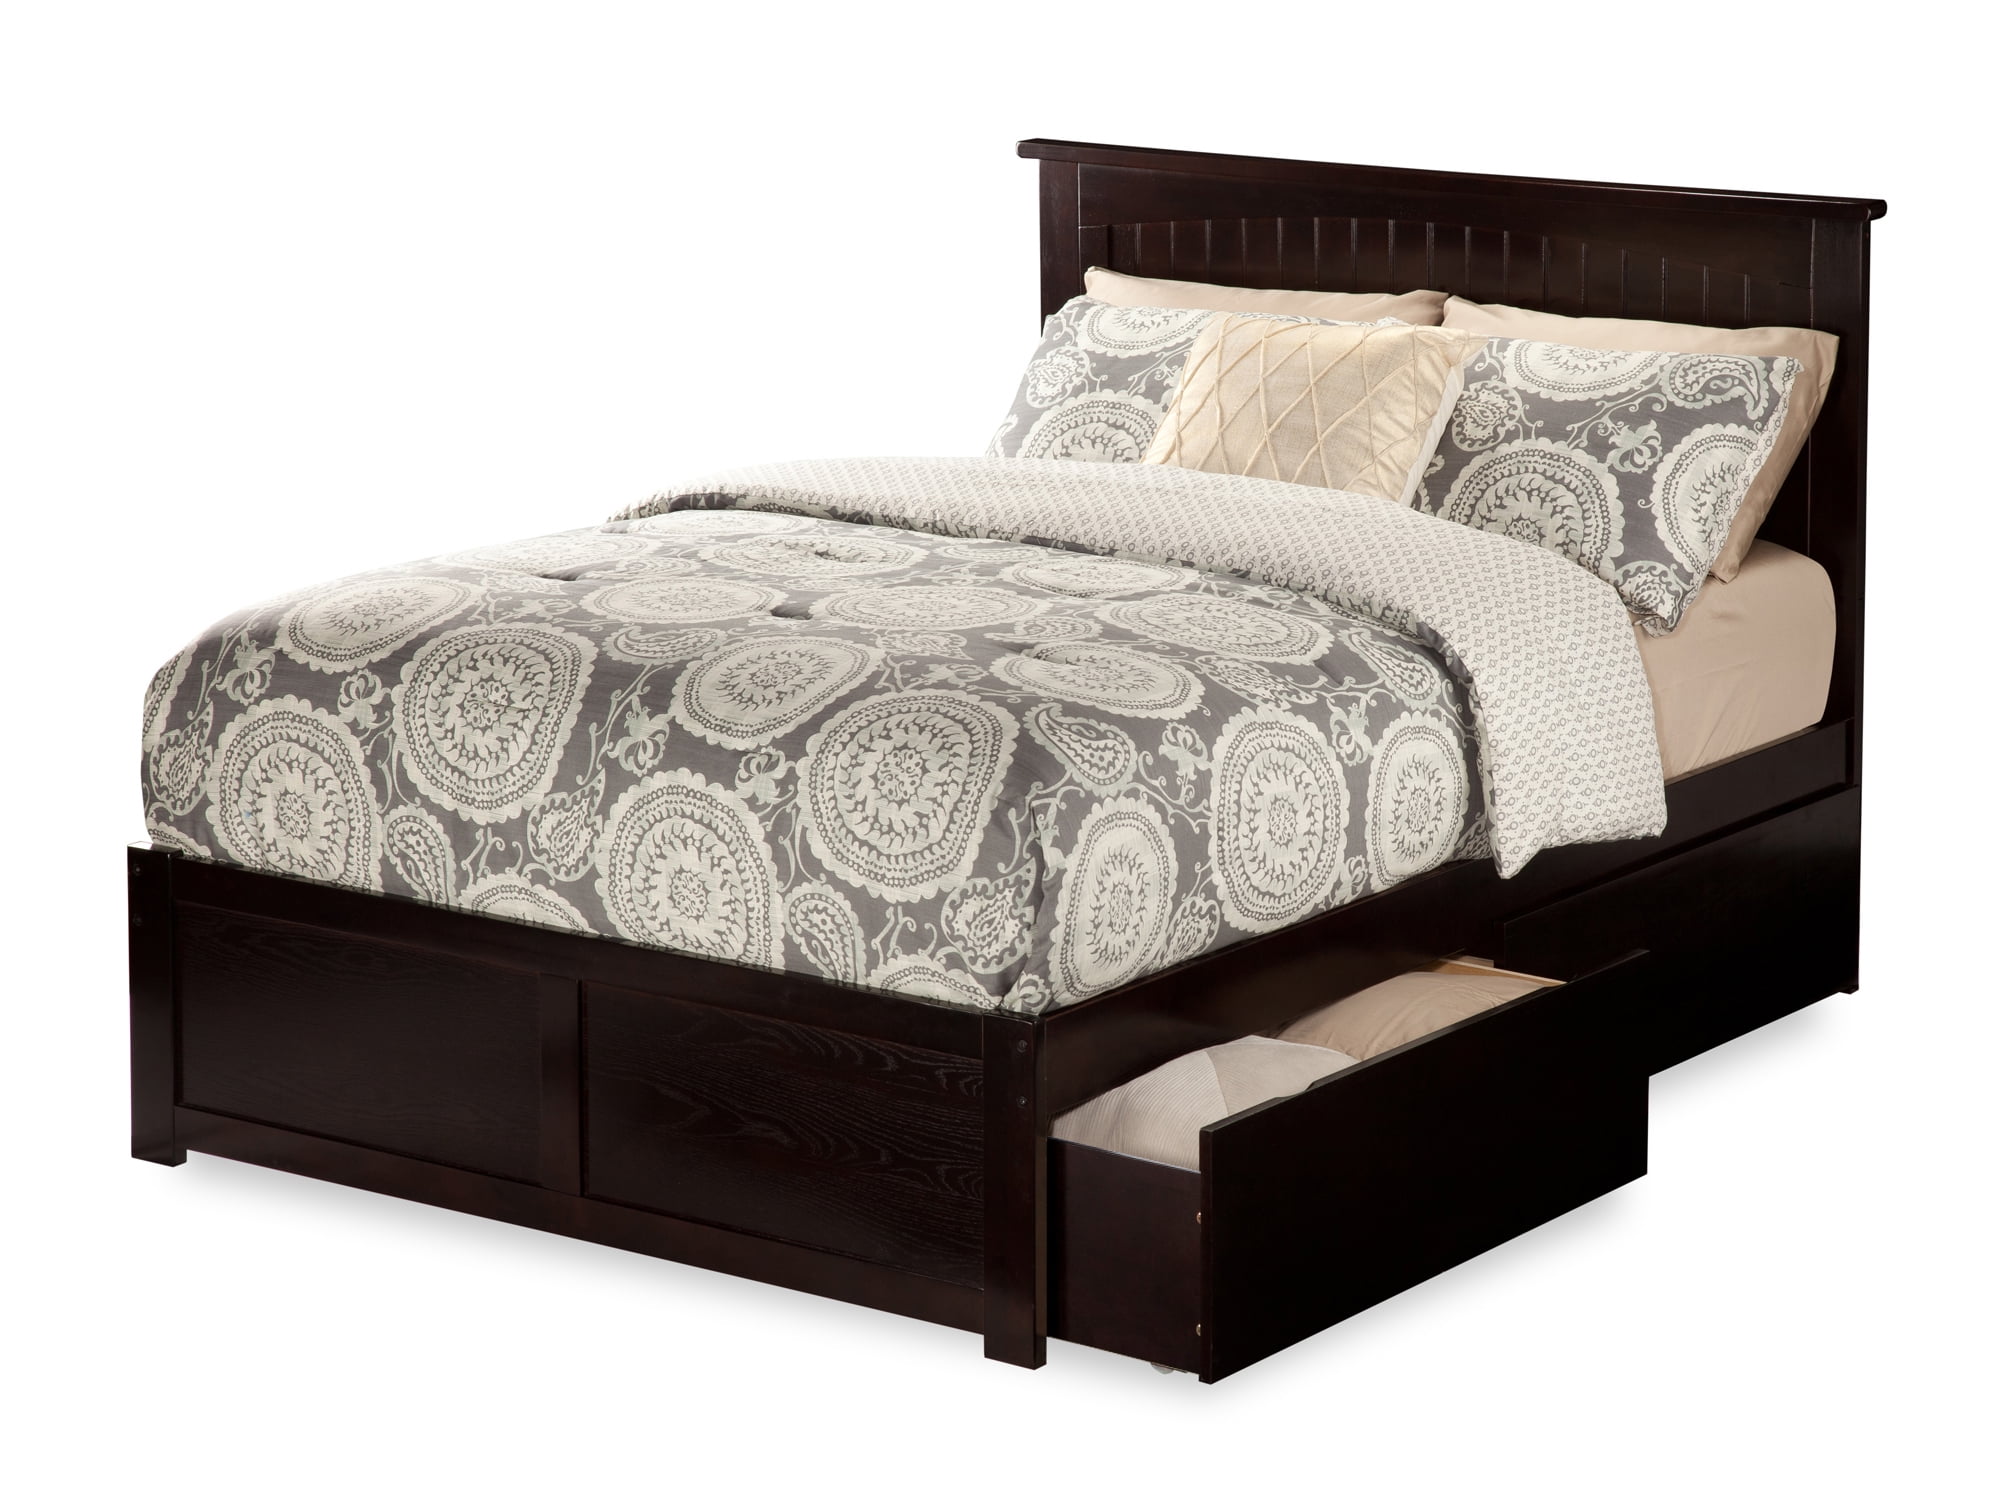 Picture of Atlantic Furniture AR8242111 Nantucket Panel Footboard & Urban Bed Drawers, Espresso - Queen